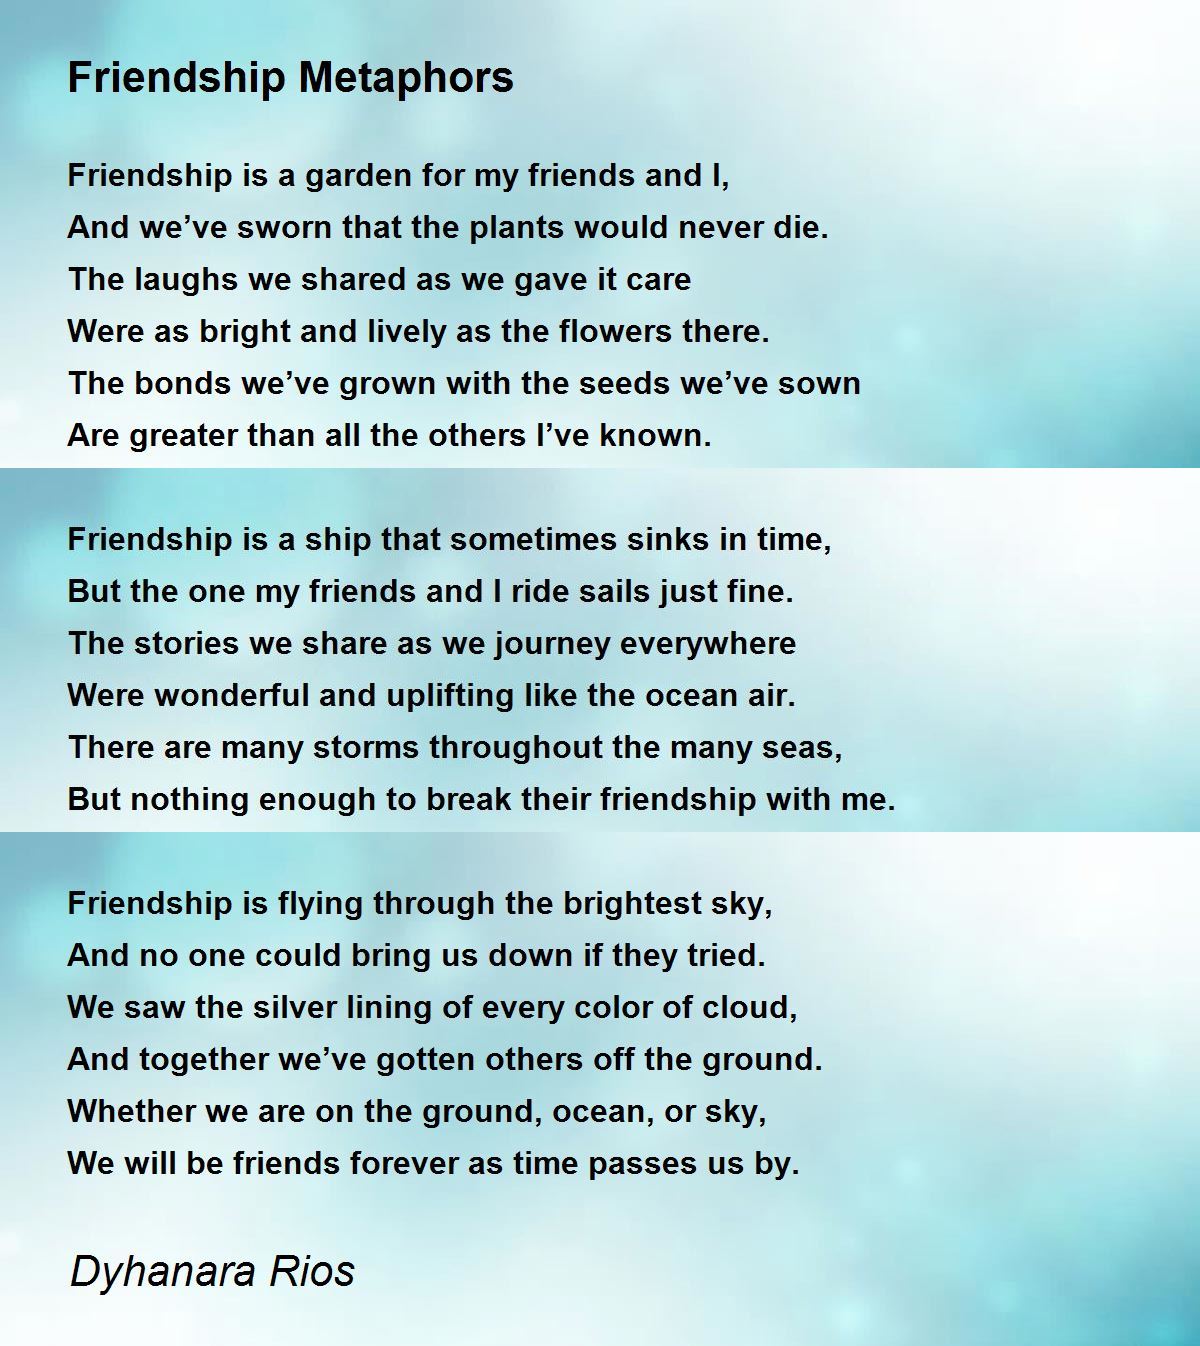 Friendship Metaphors Poem By Dyhanara Rios